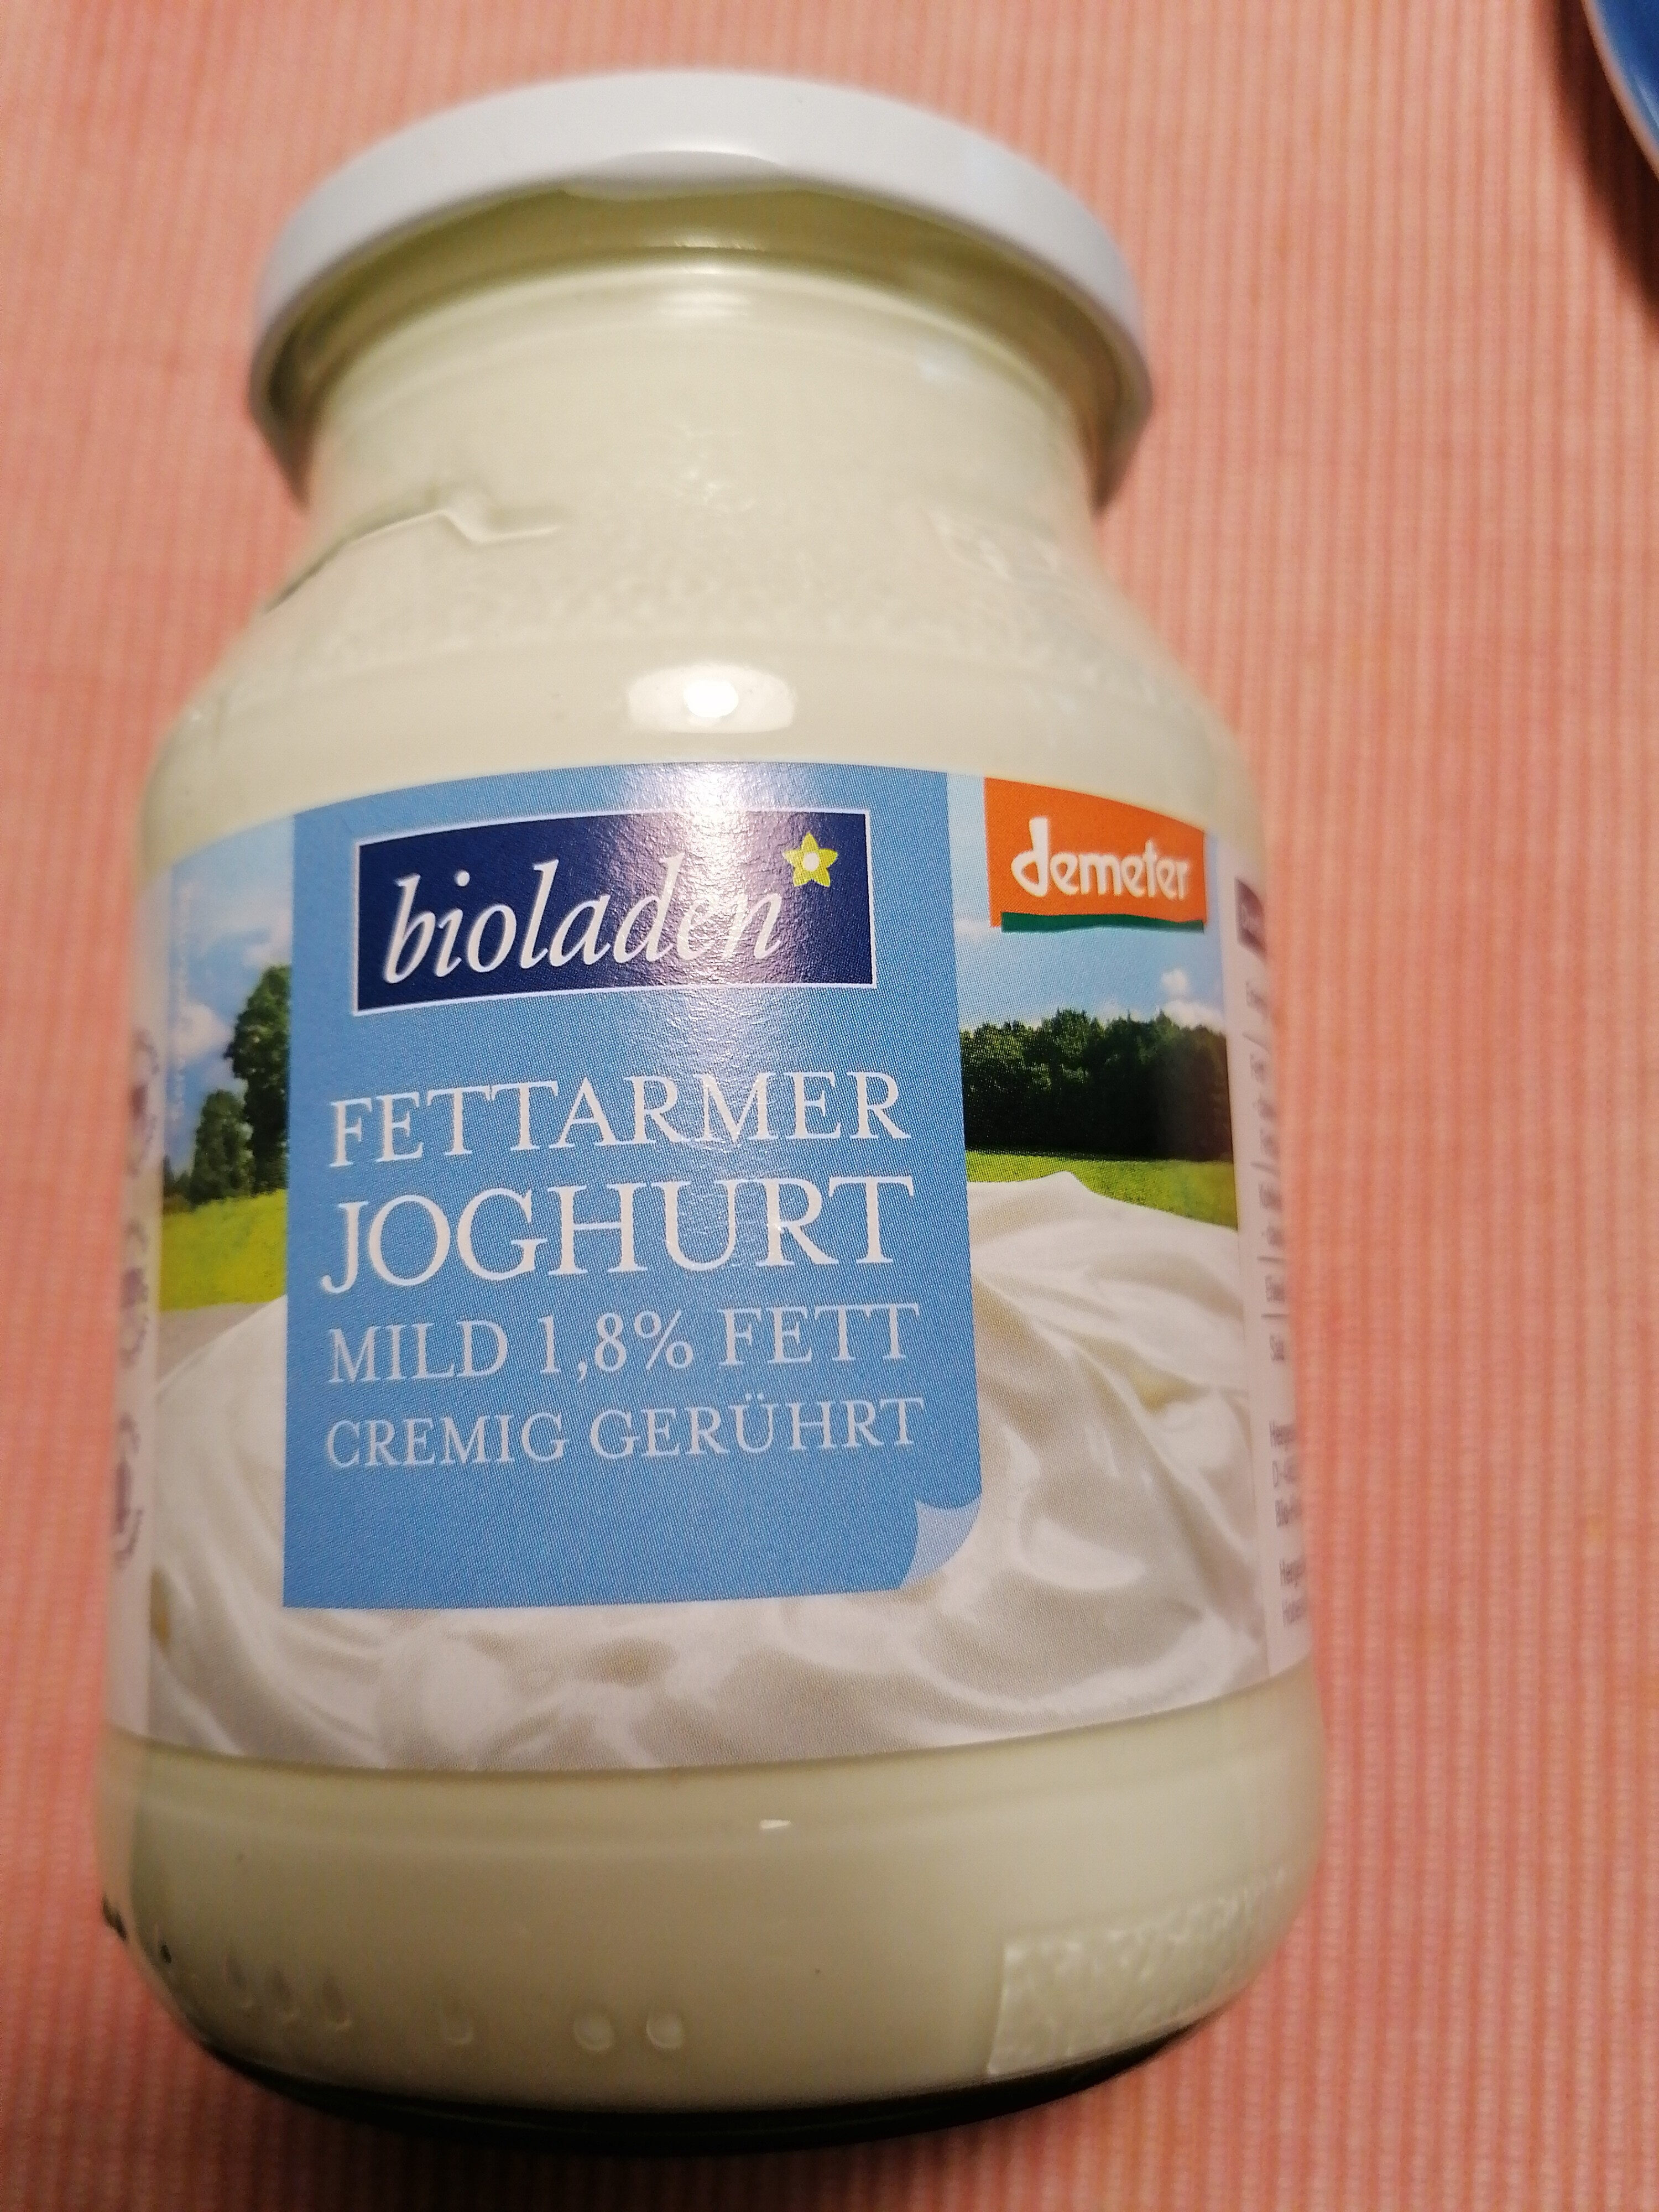 fettarmer Joghurt mild 1,8% Fett, cremig gerührt - Produkt